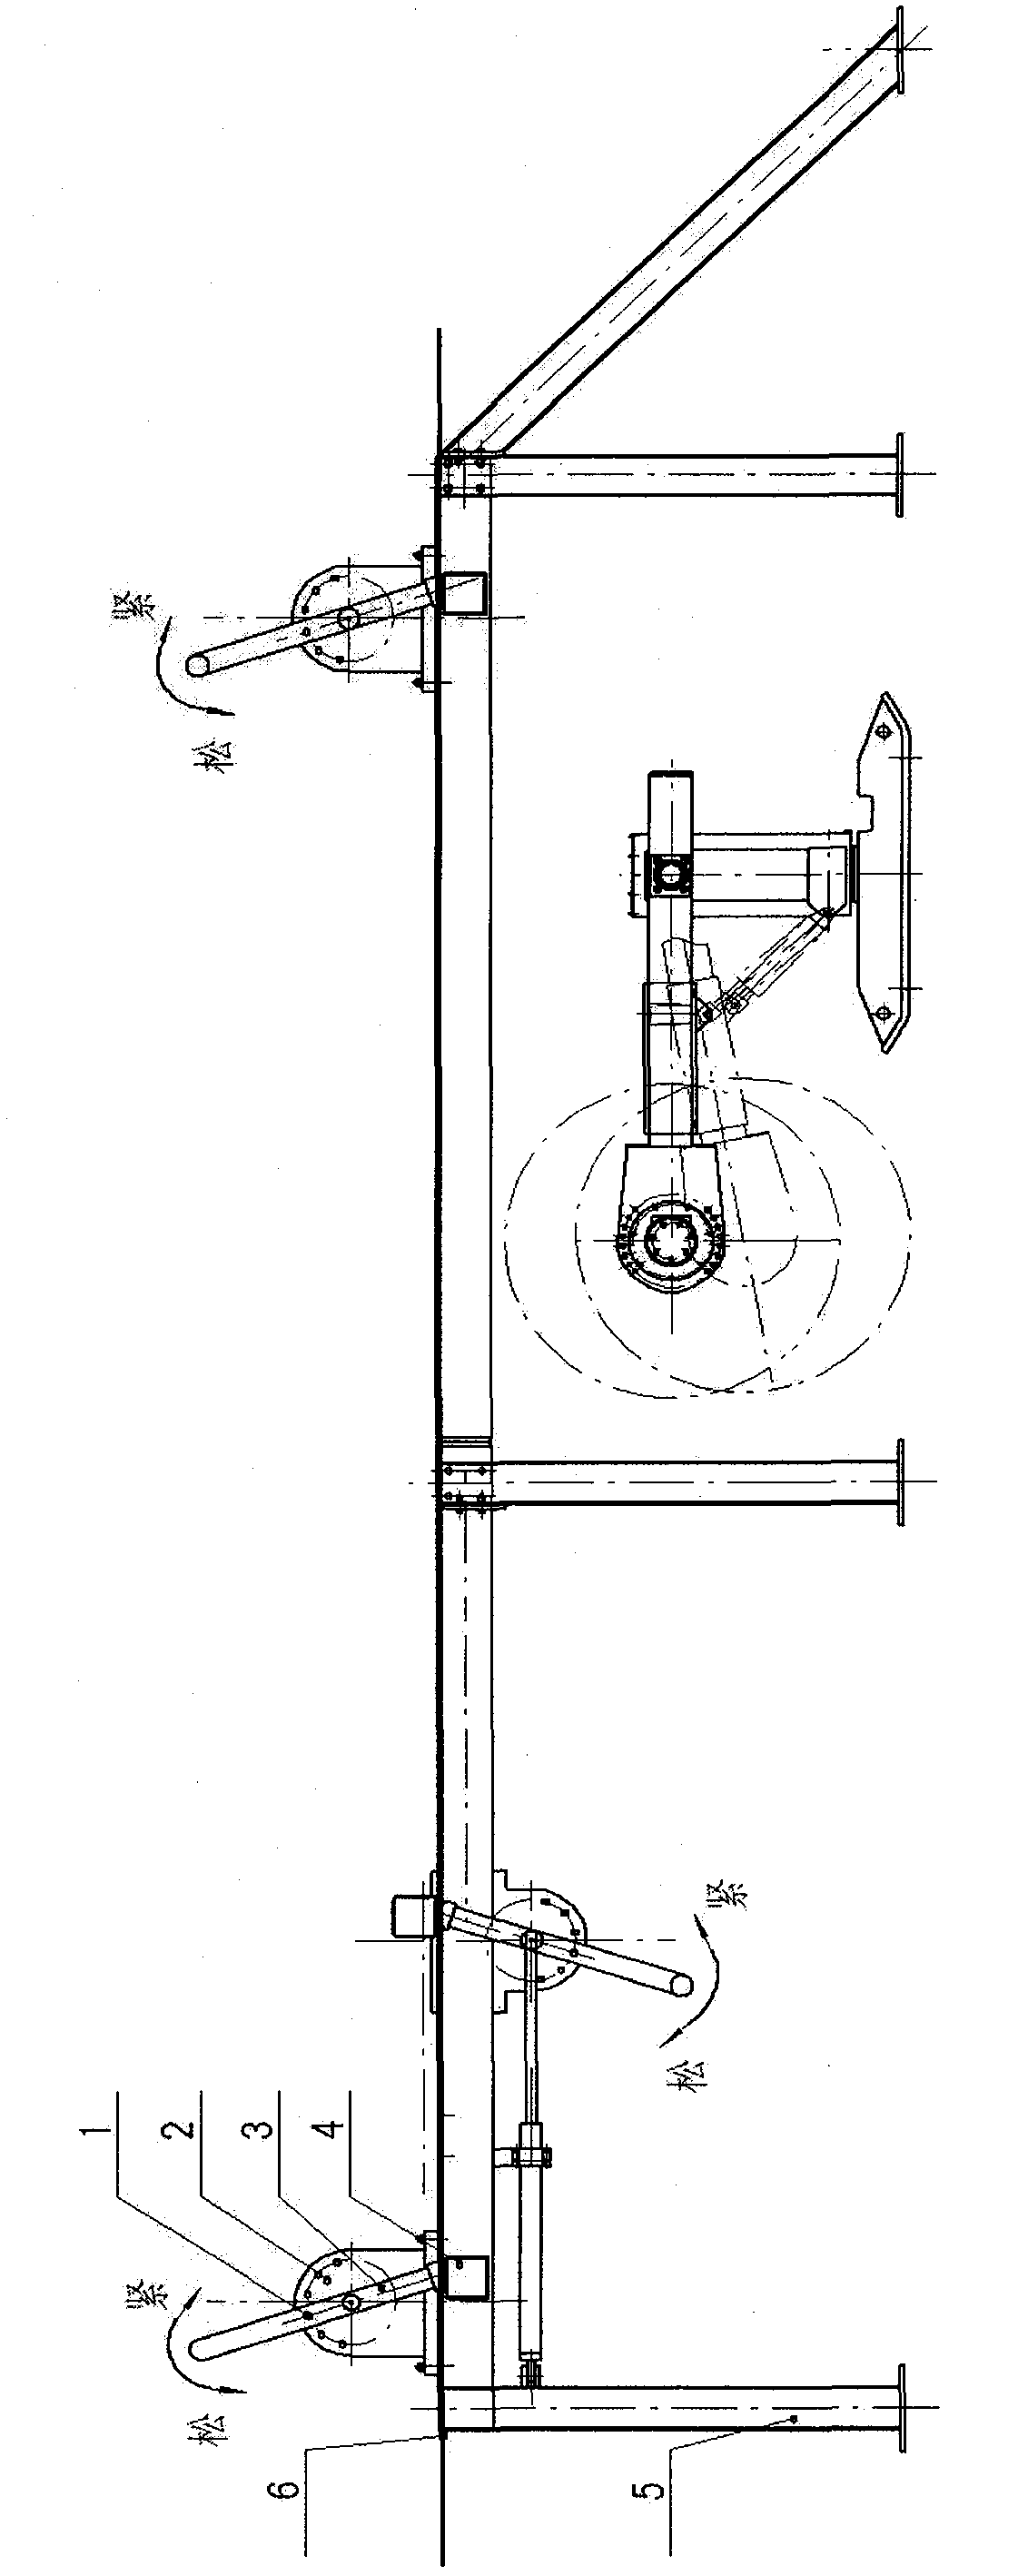 Novel belt clamping mechanism for belt conveyor